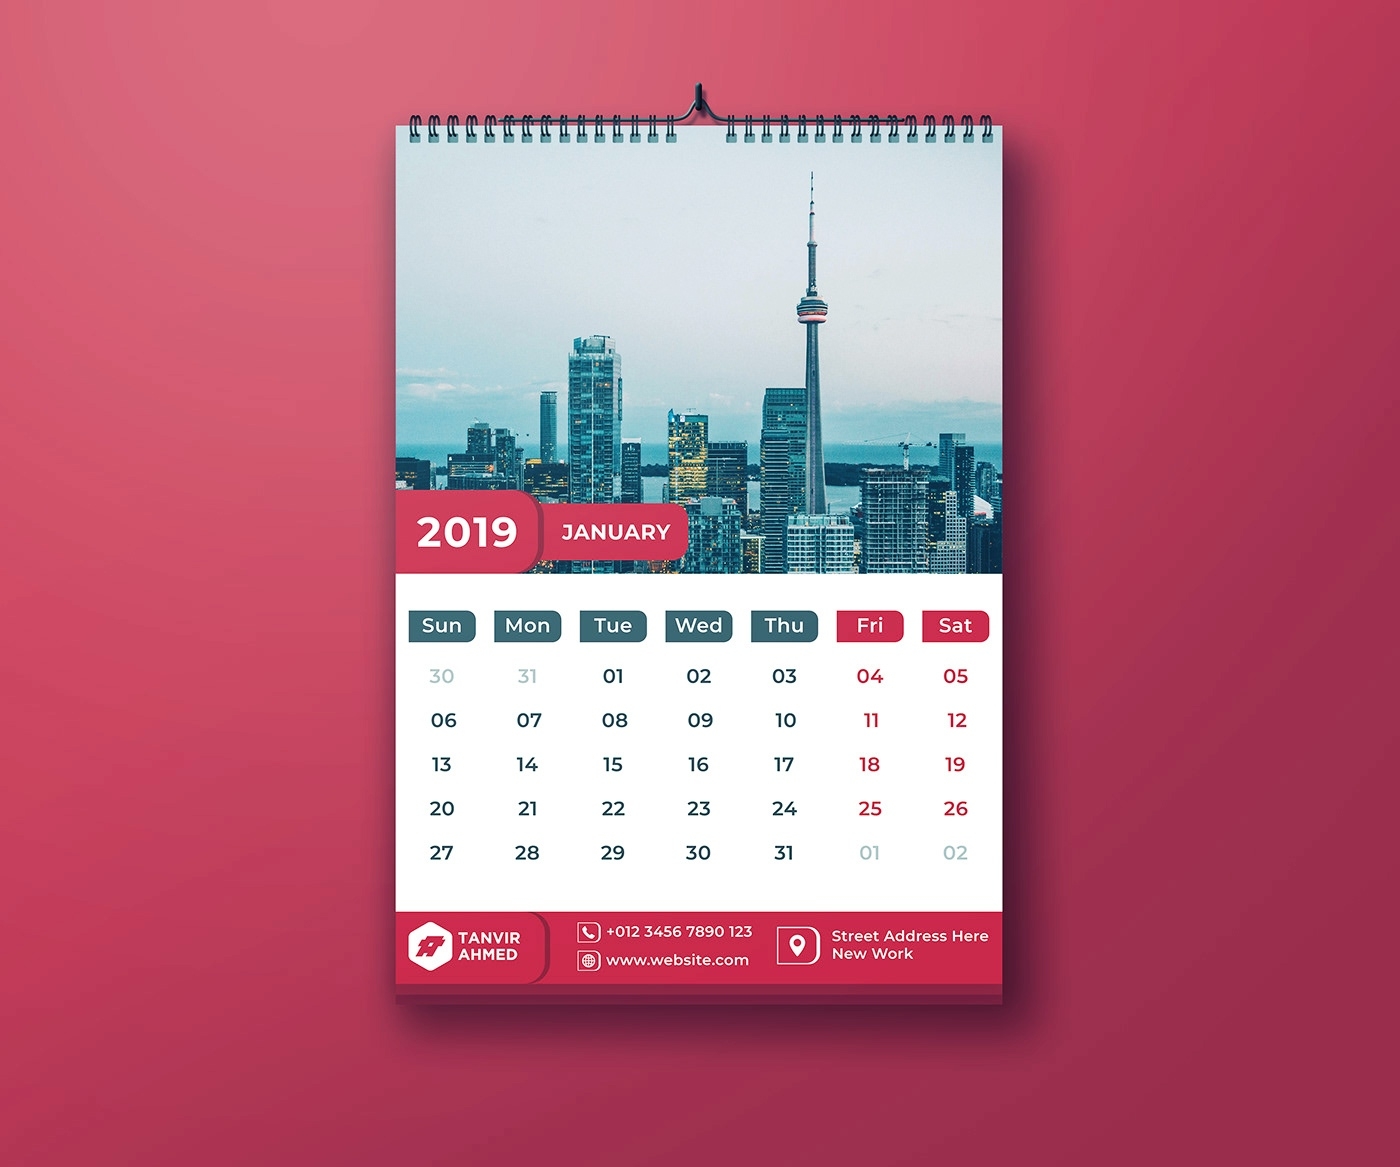 Wall Calendar 2019 | Free Psd Template | Psd Repo Calendar Template Design Free